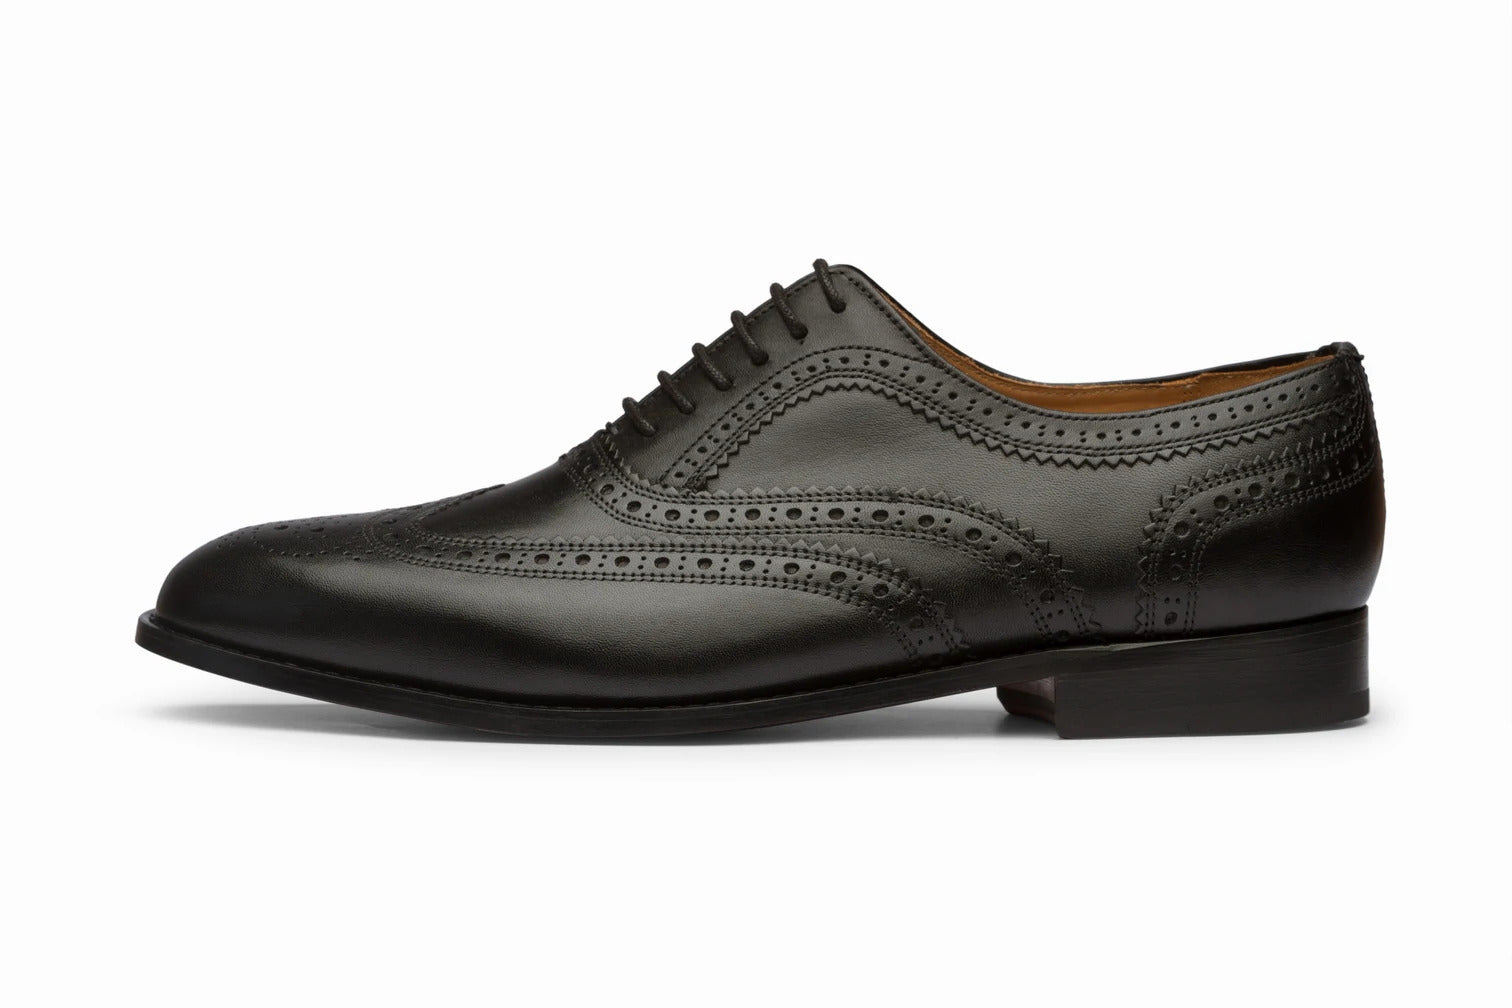 Wingtip brogue black, formal shoes for men in Dubai.